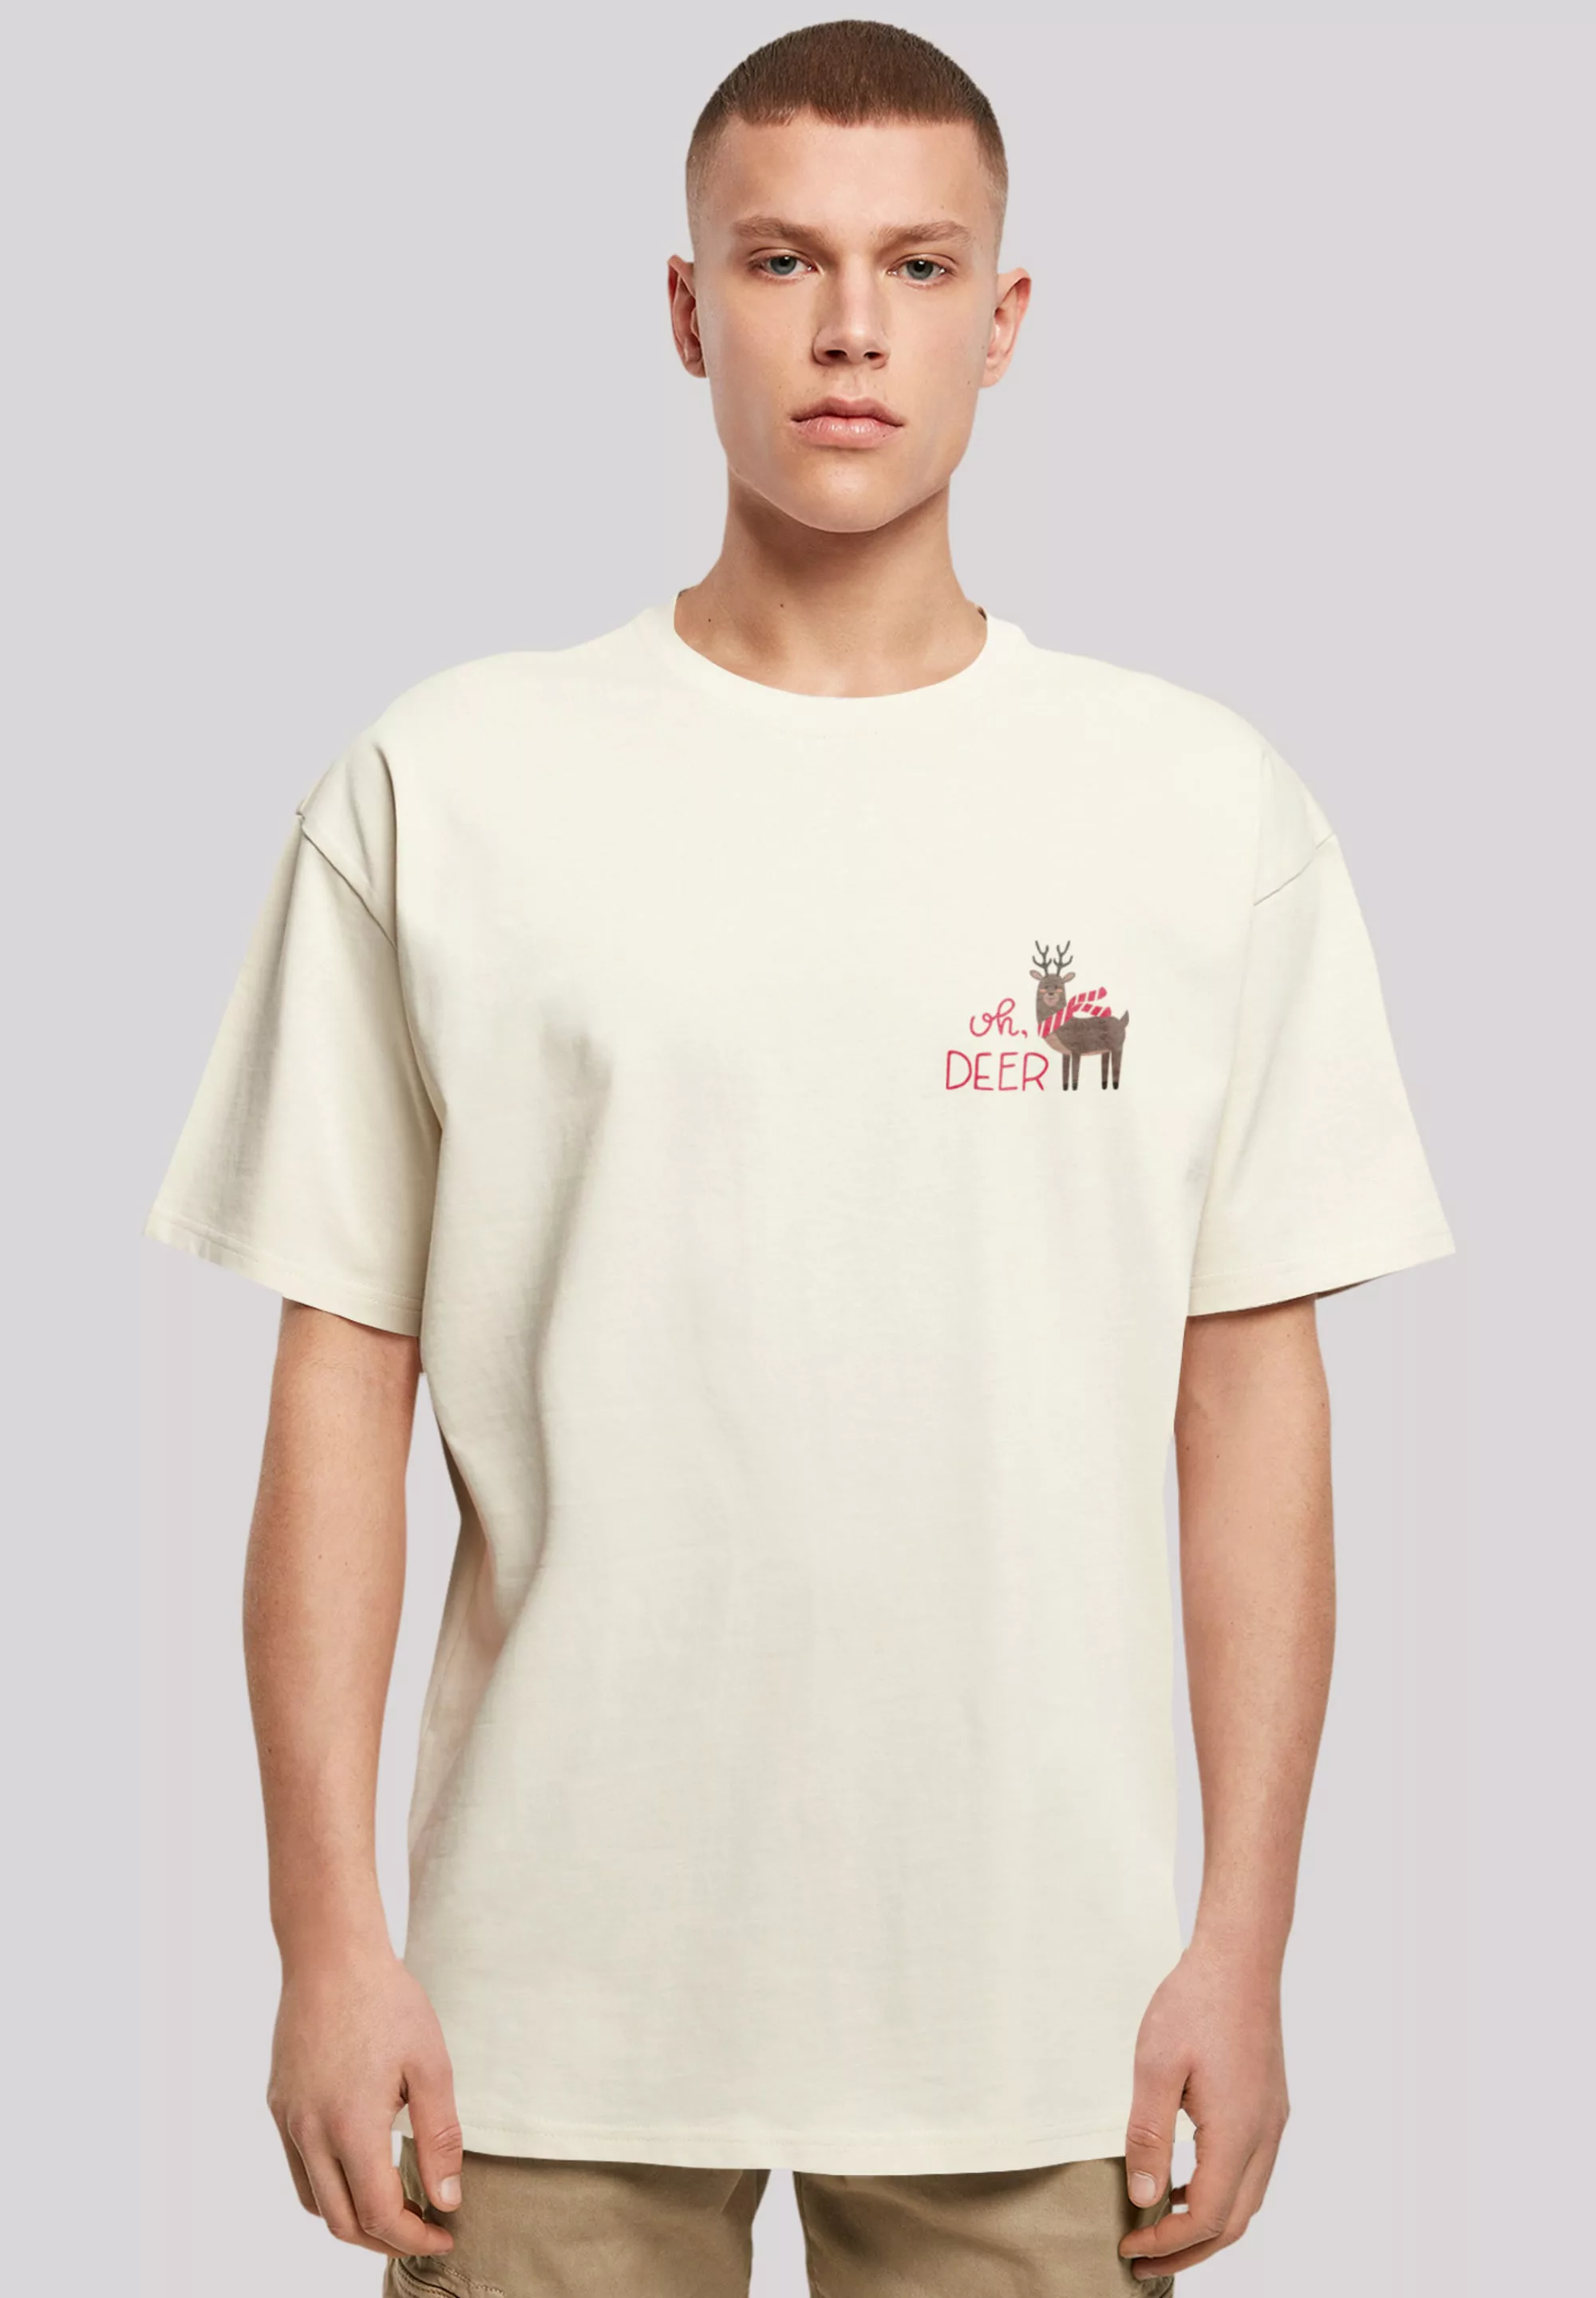 F4NT4STIC T-Shirt "Christmas Deer", Premium Qualität, Rock-Musik, Band günstig online kaufen